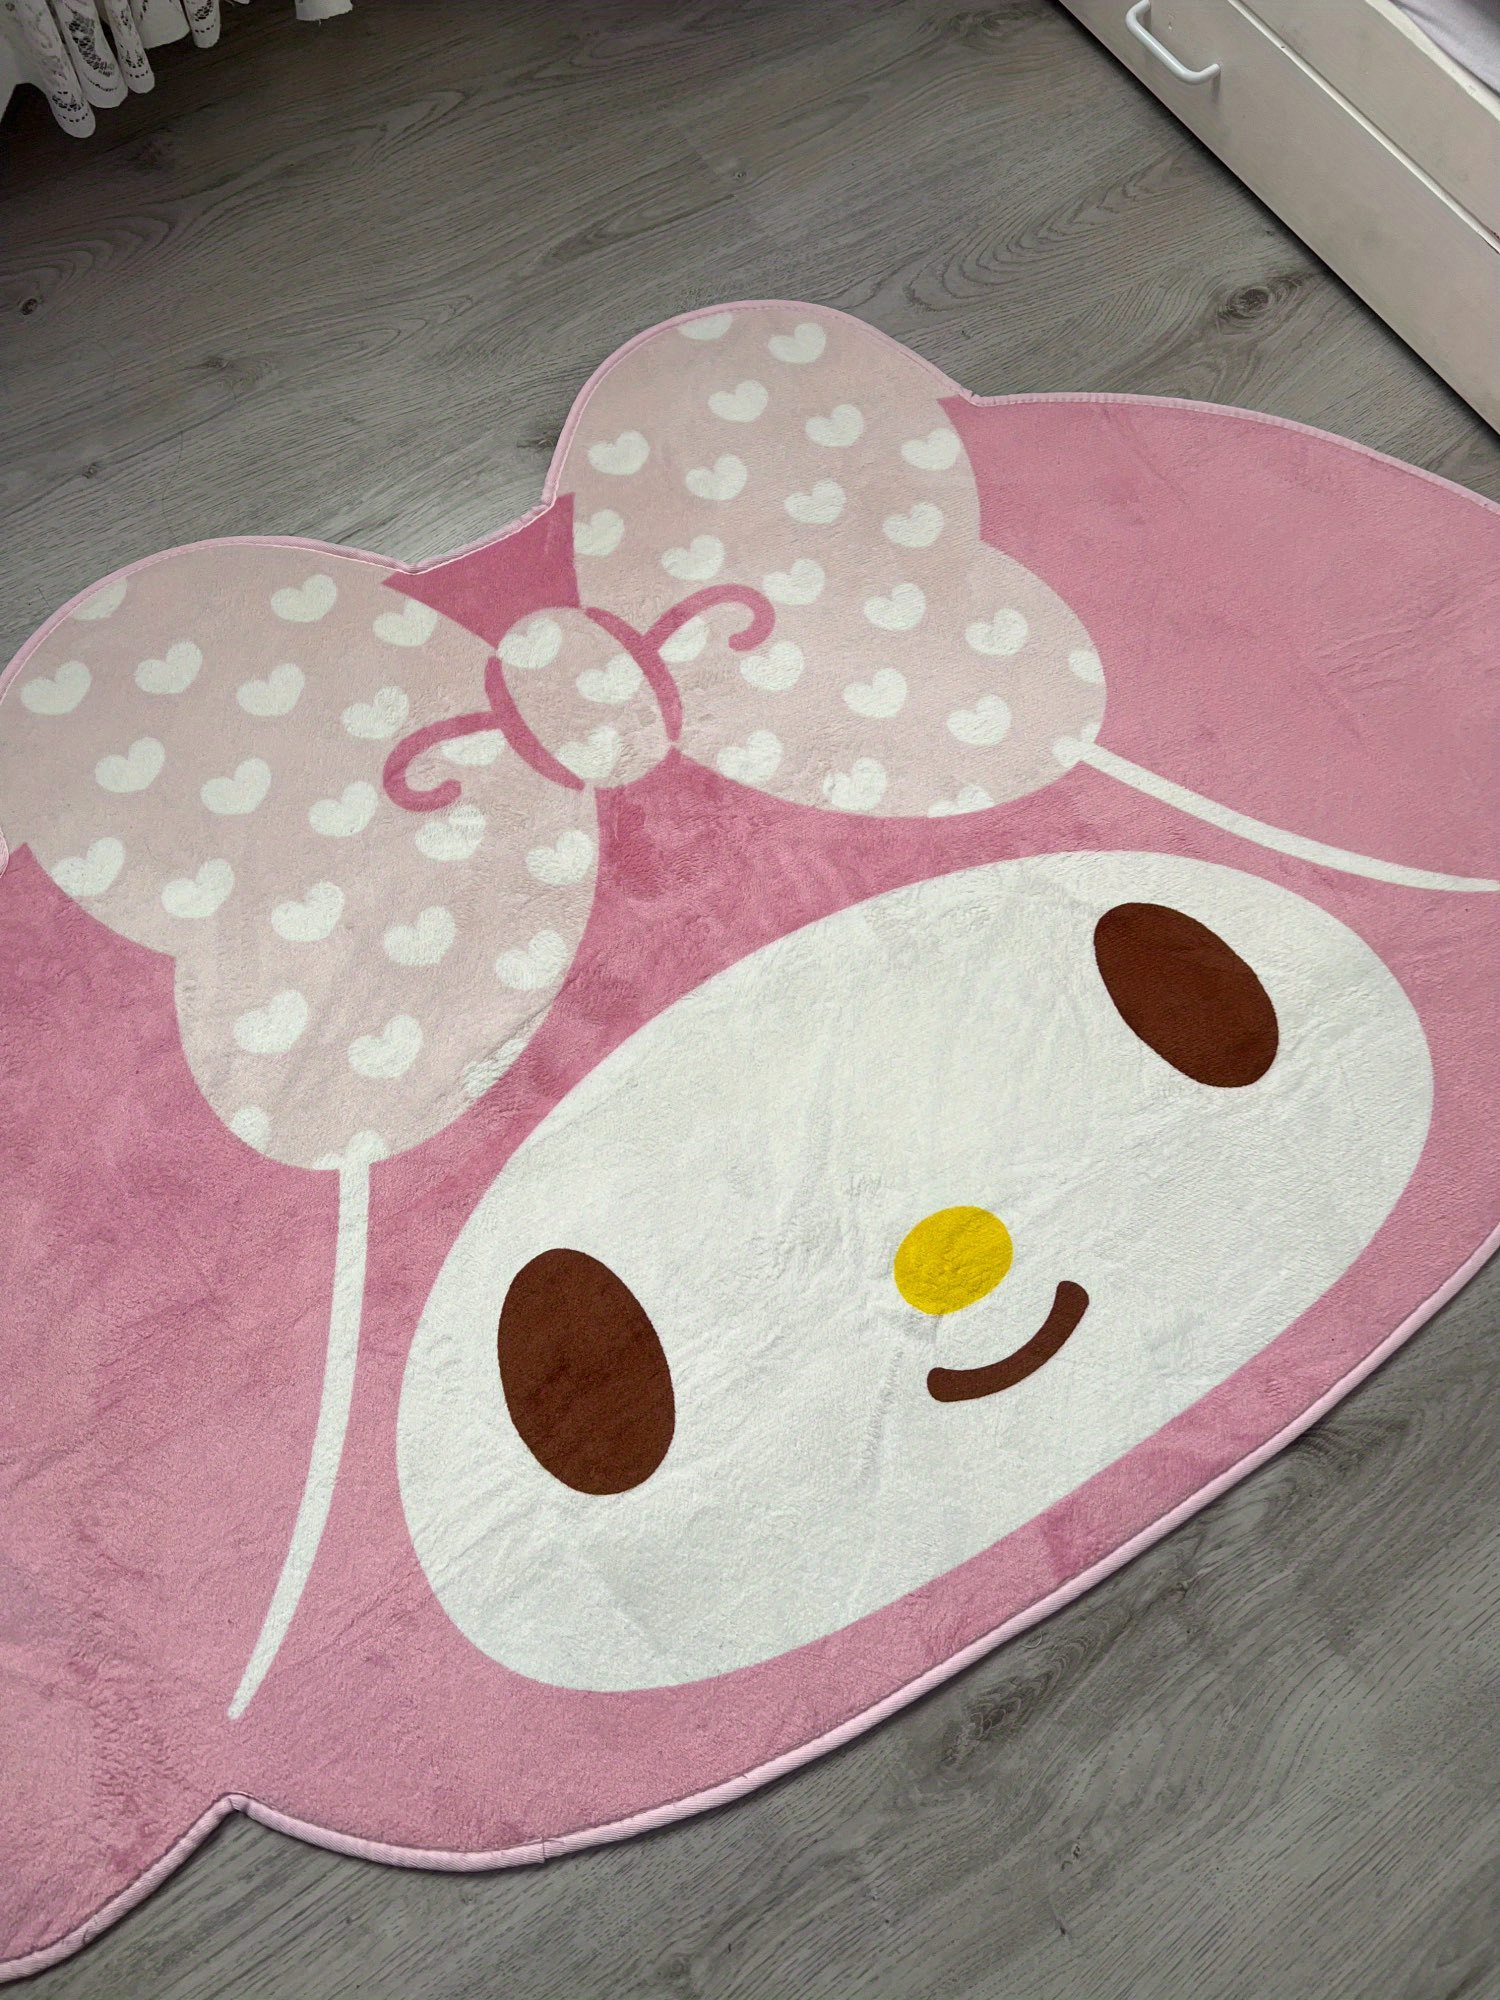 Hello Kitty rug mat white pink girls women adults home room decor